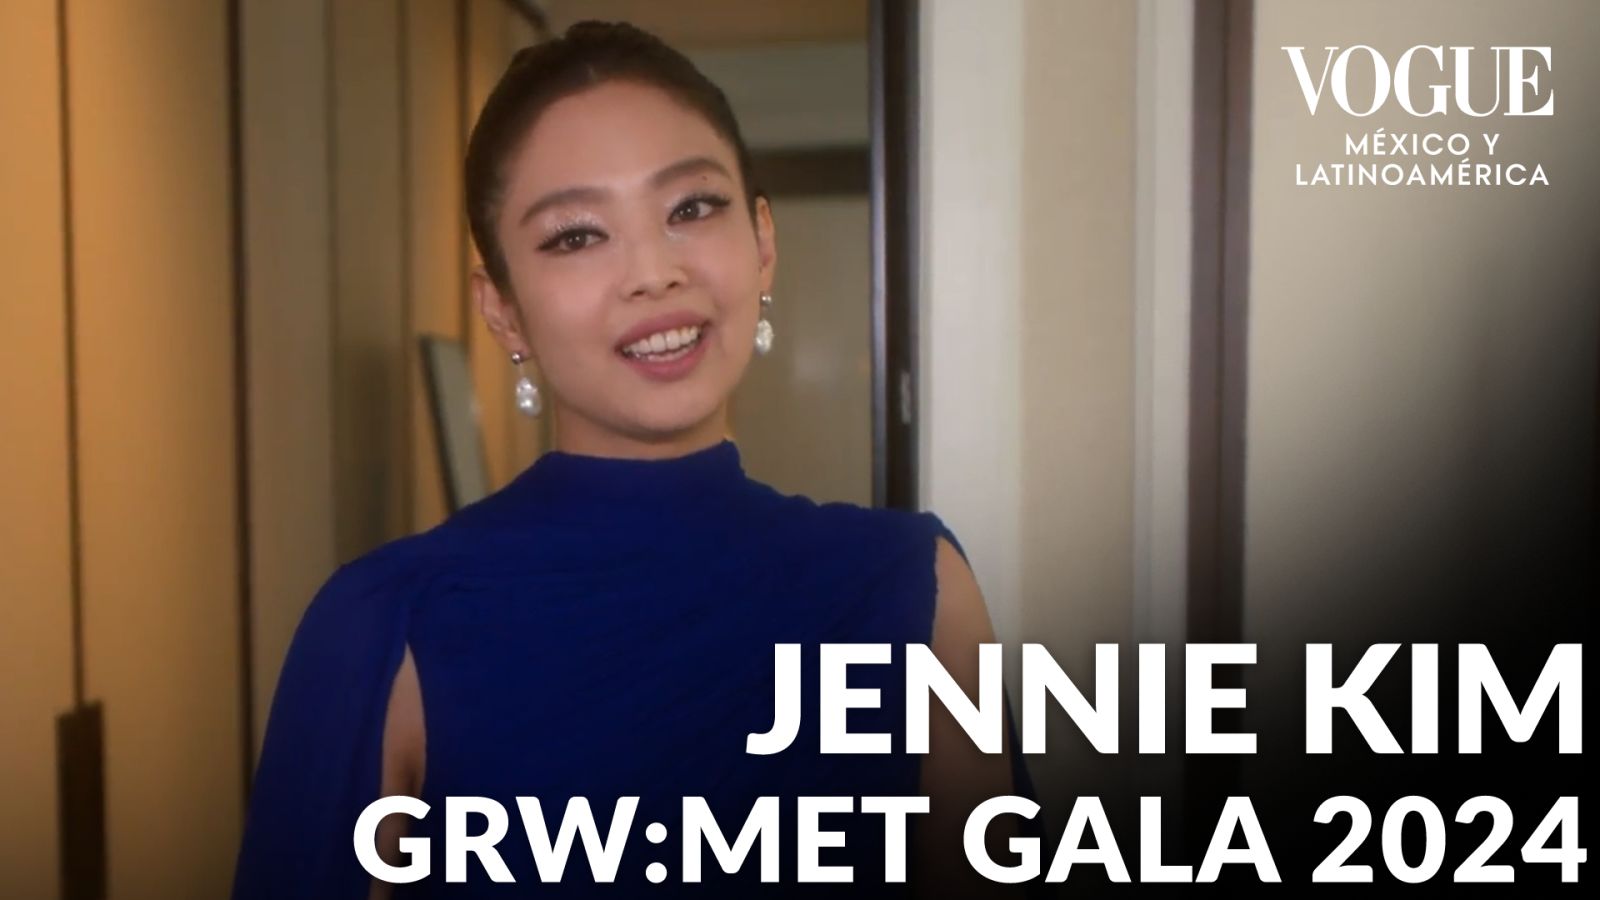 Jennie Kim se prepara para la MET Gala 2024